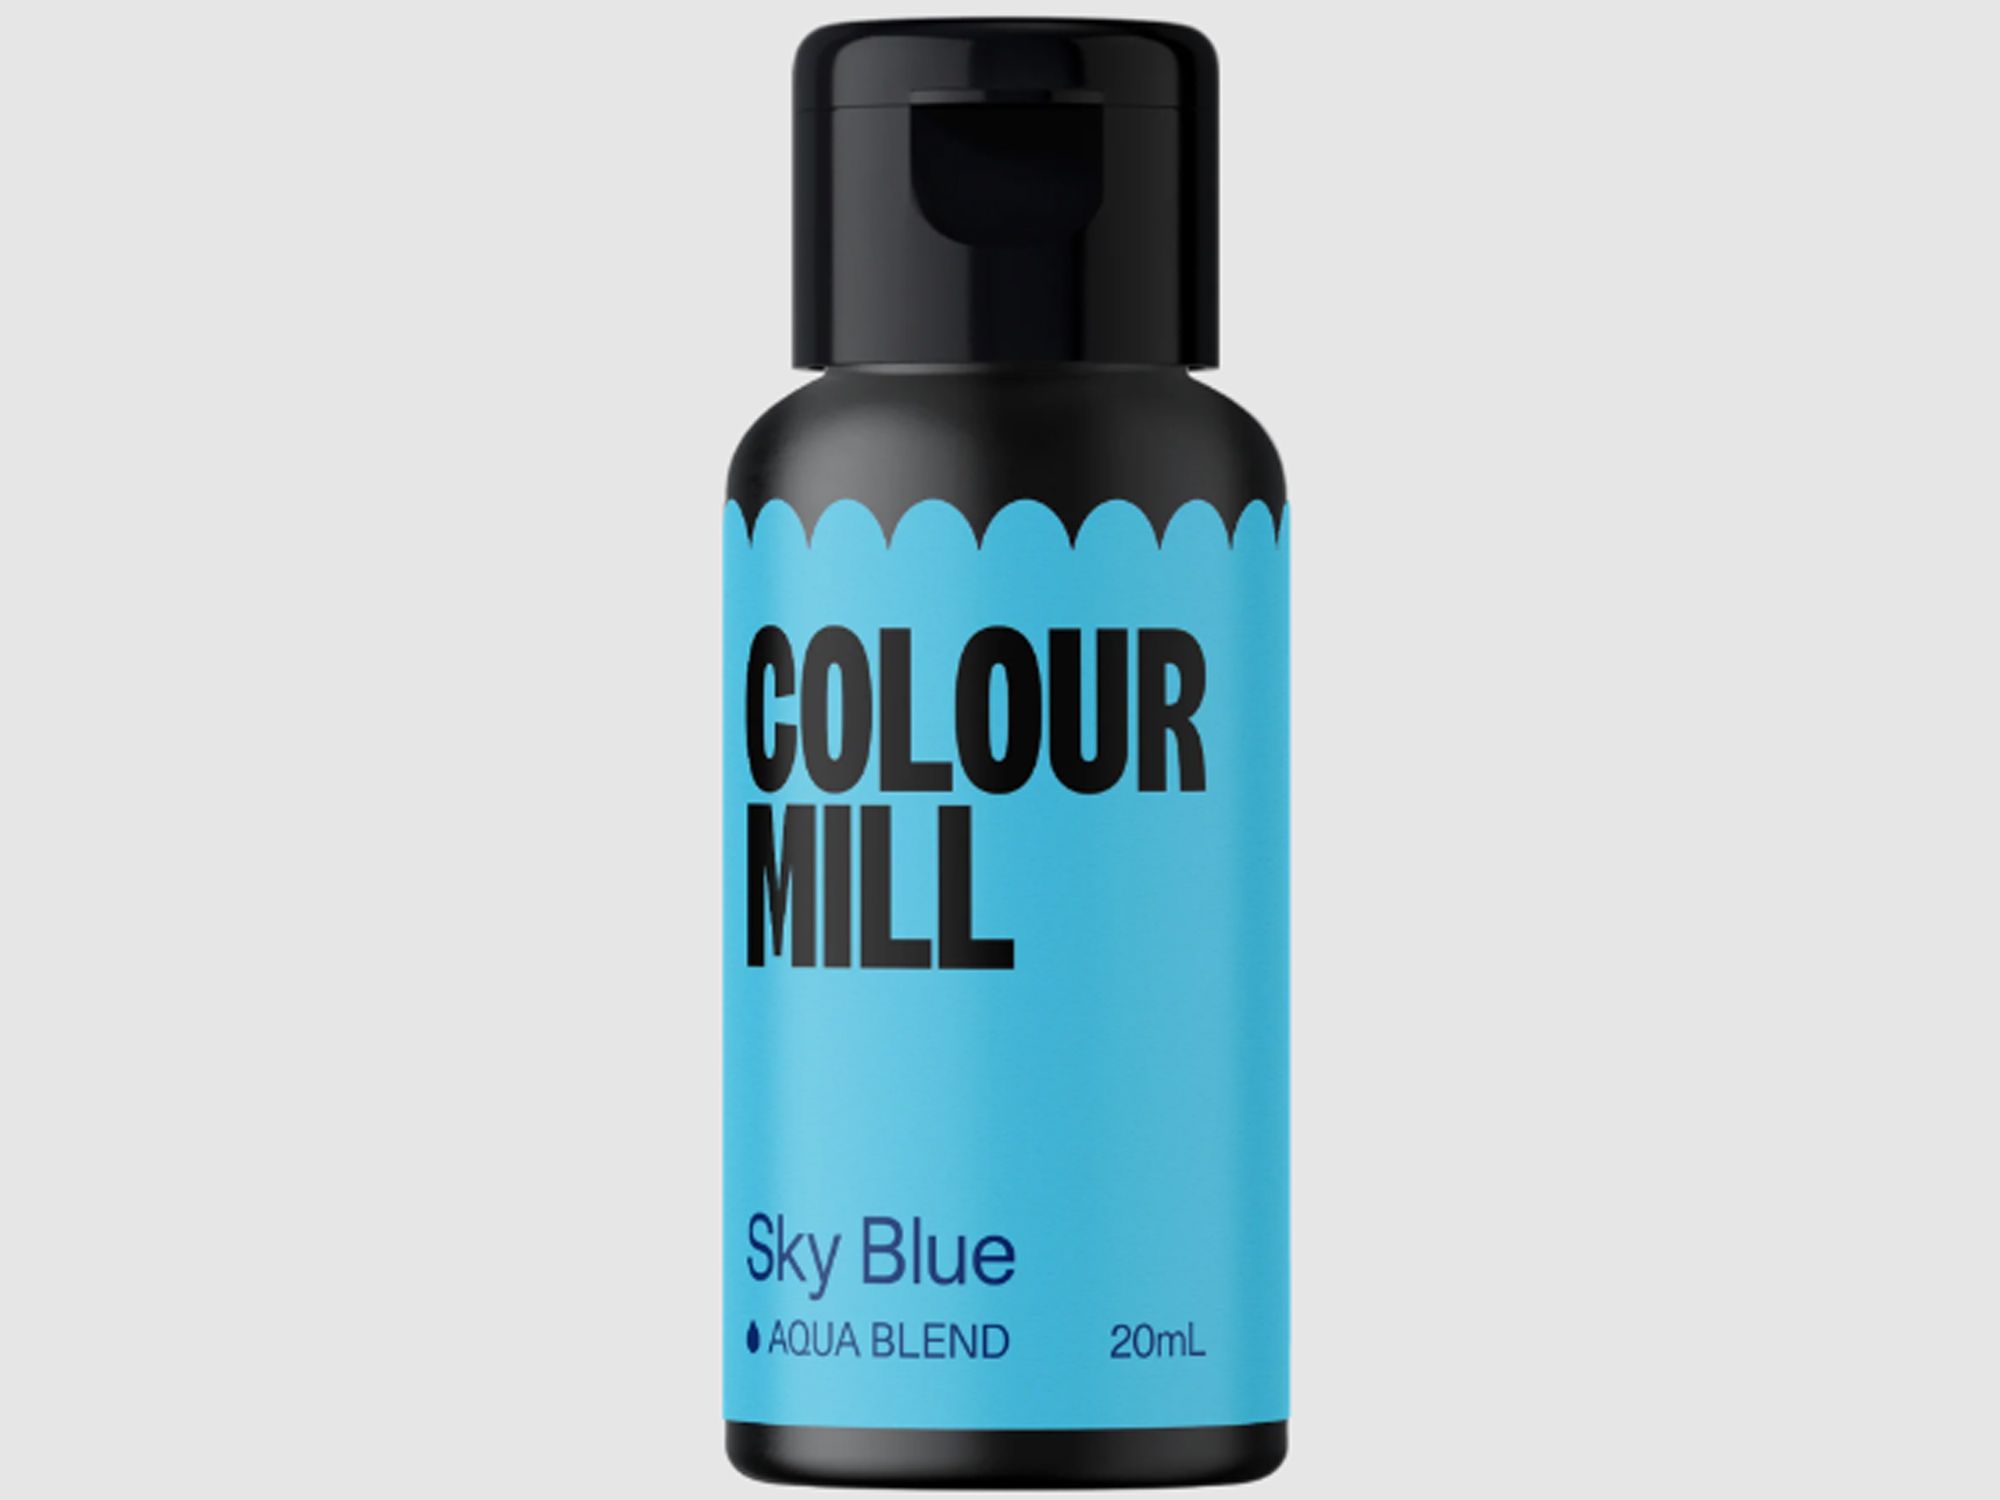 Colour Mill Sky Blue (Aqua Blend) 20ml